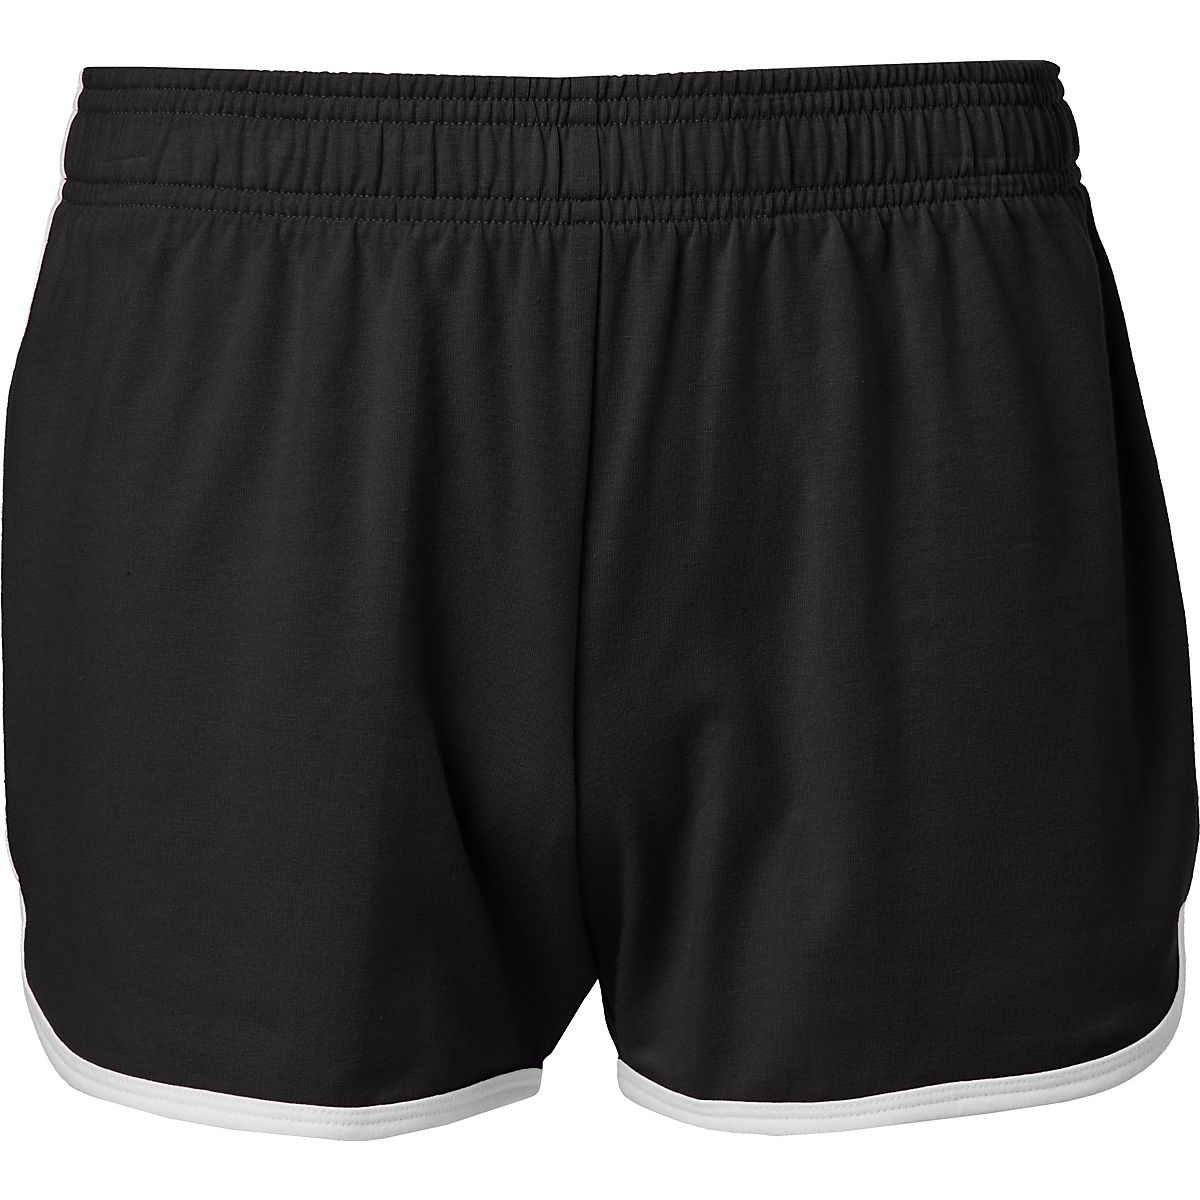 NWT DSG Women's Mid-Rise Performance 7 Athletic Shorts Black Size XL $20  JK288